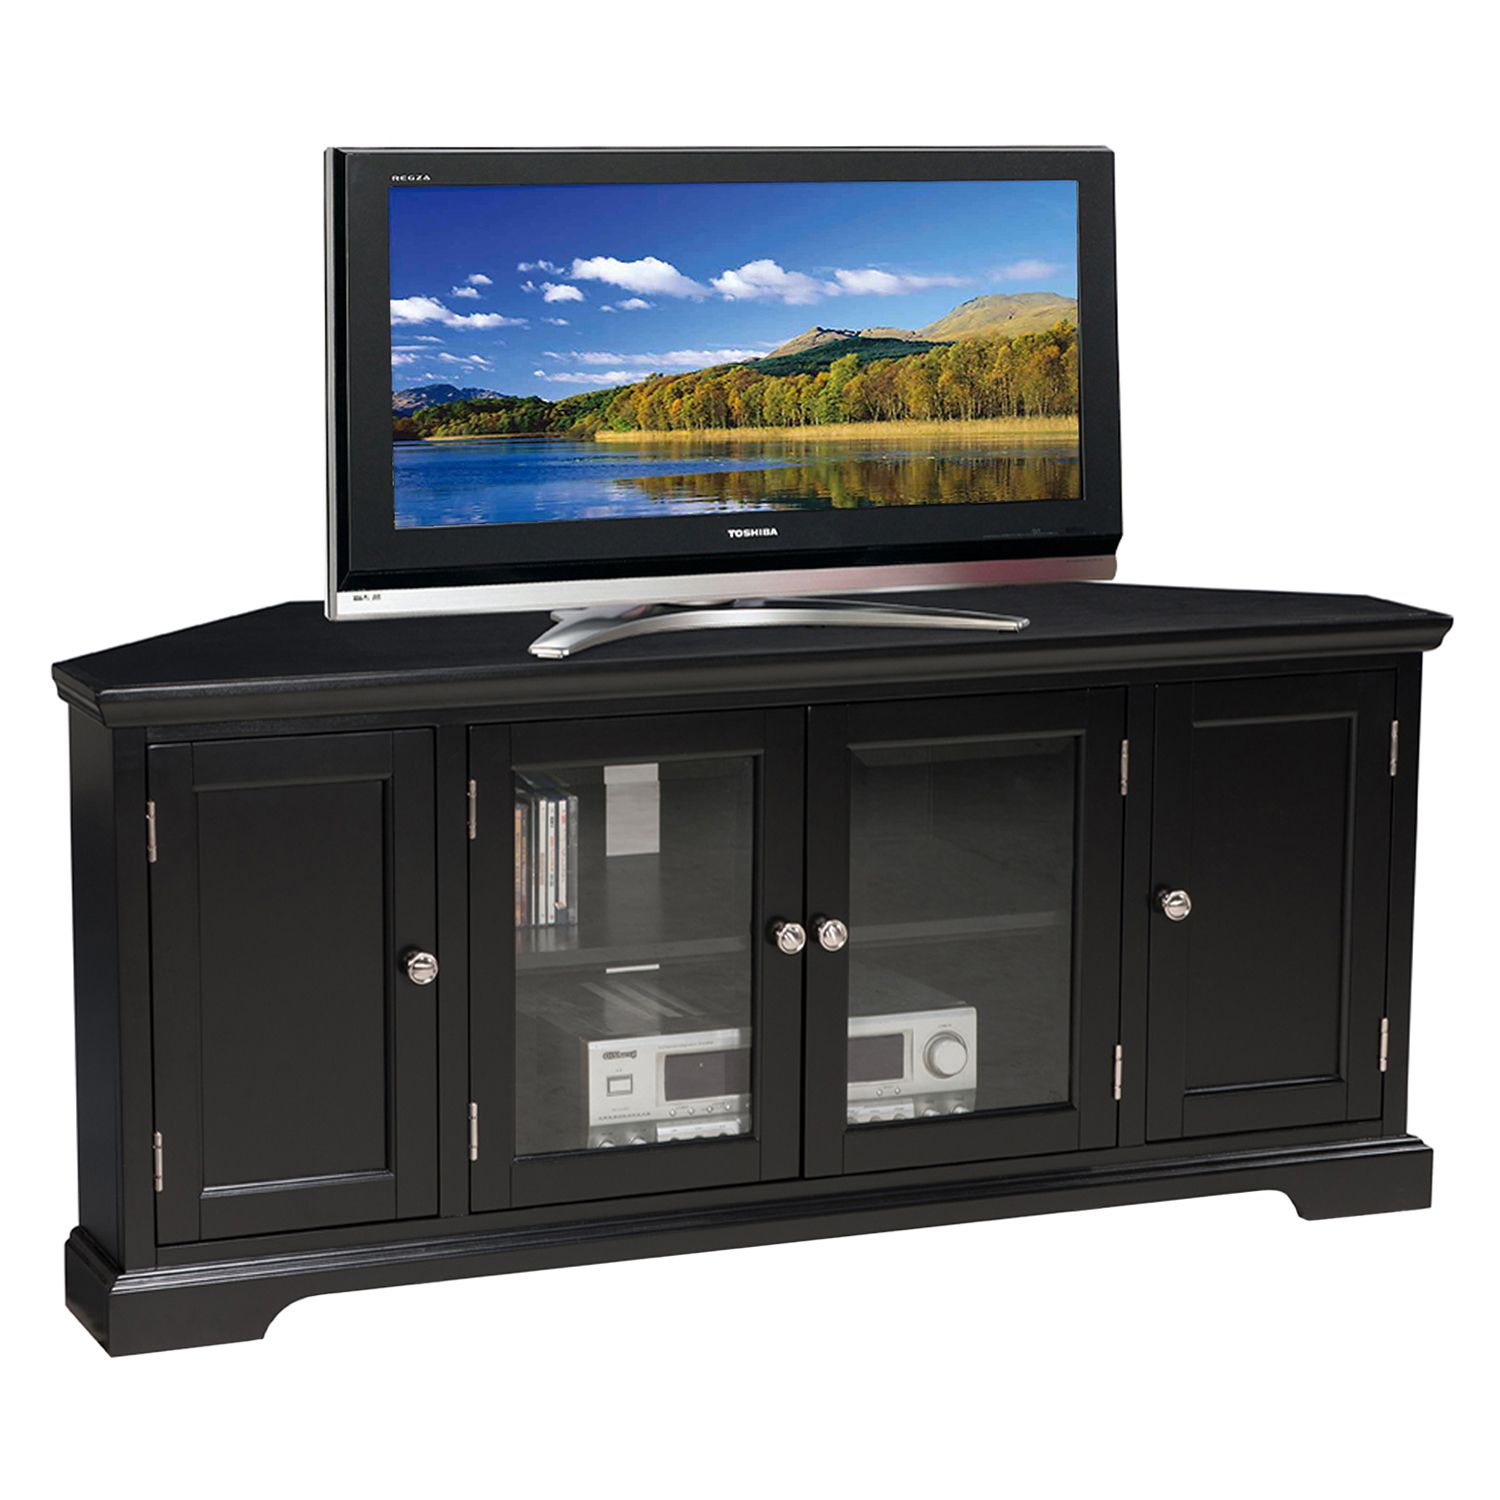 Image for Leick Furniture Black Finish 4-Door Corner TV Stand at Kohl's.